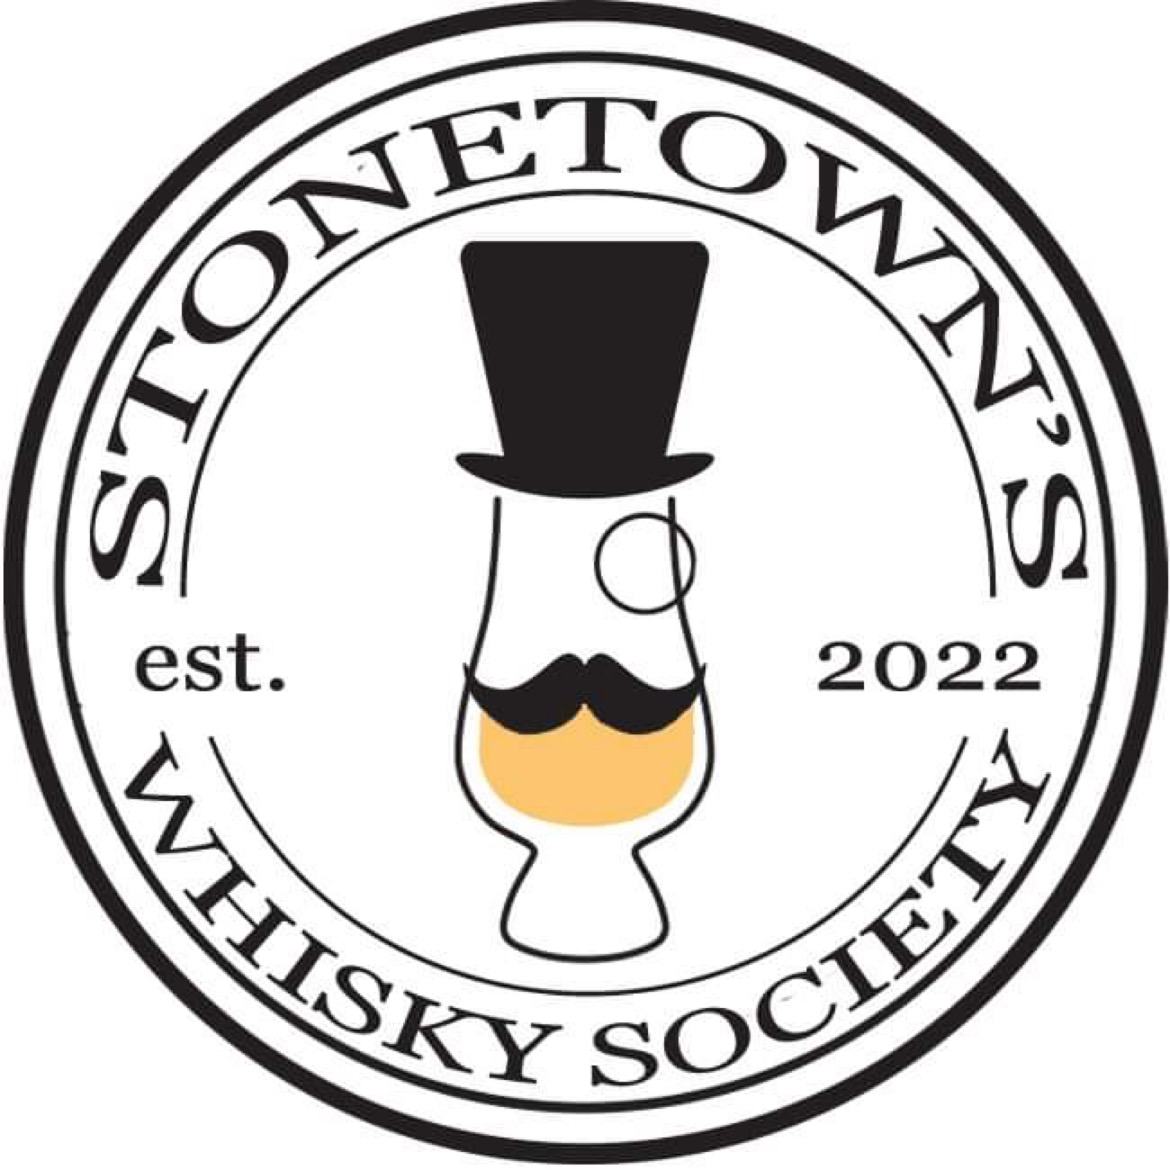 Stonetown’s Whisky Society 